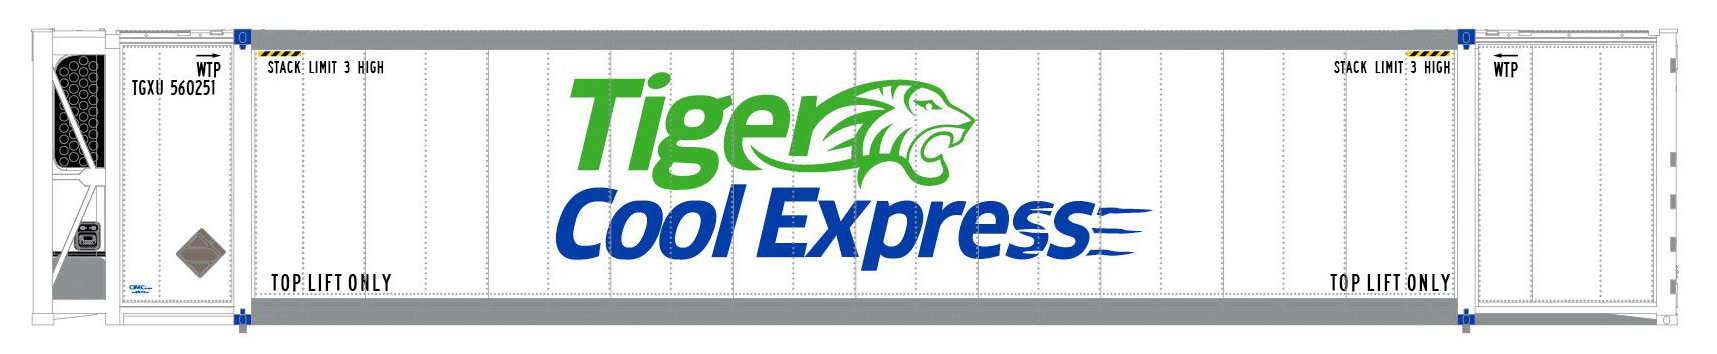 Tiger Cool Express